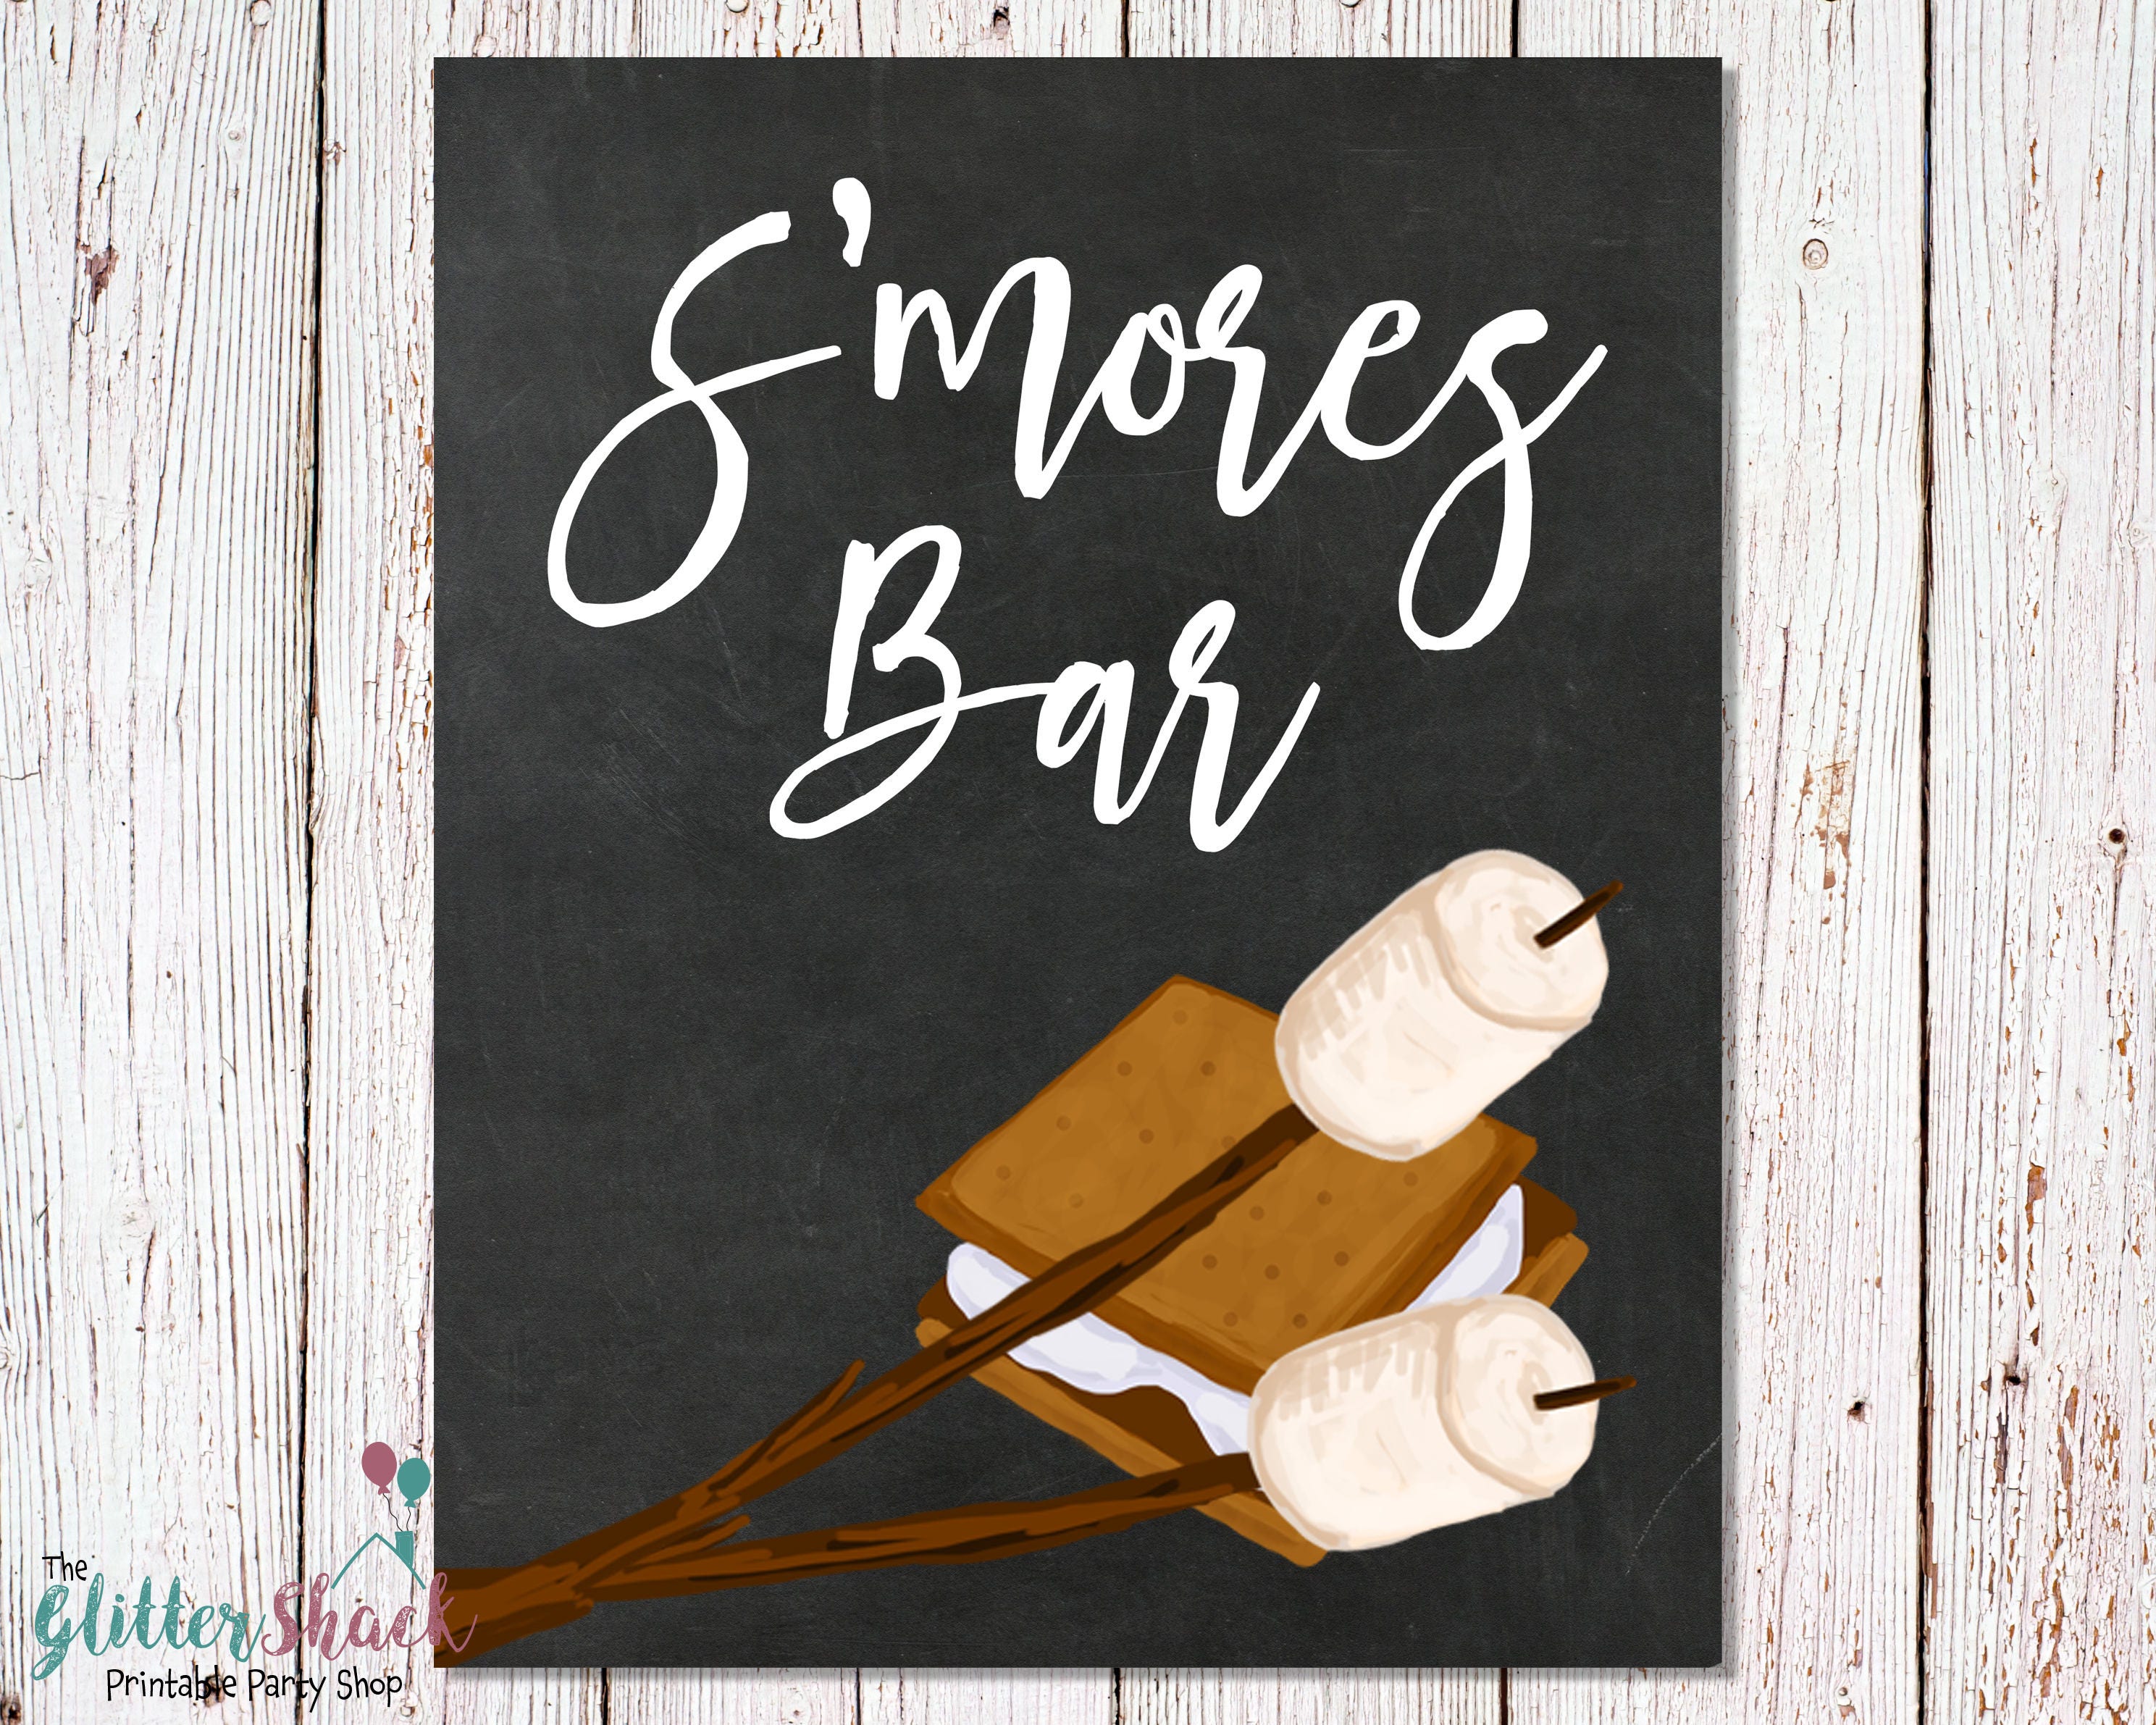 s-mores-bar-chalkboard-sign-printable-s-mores-bar